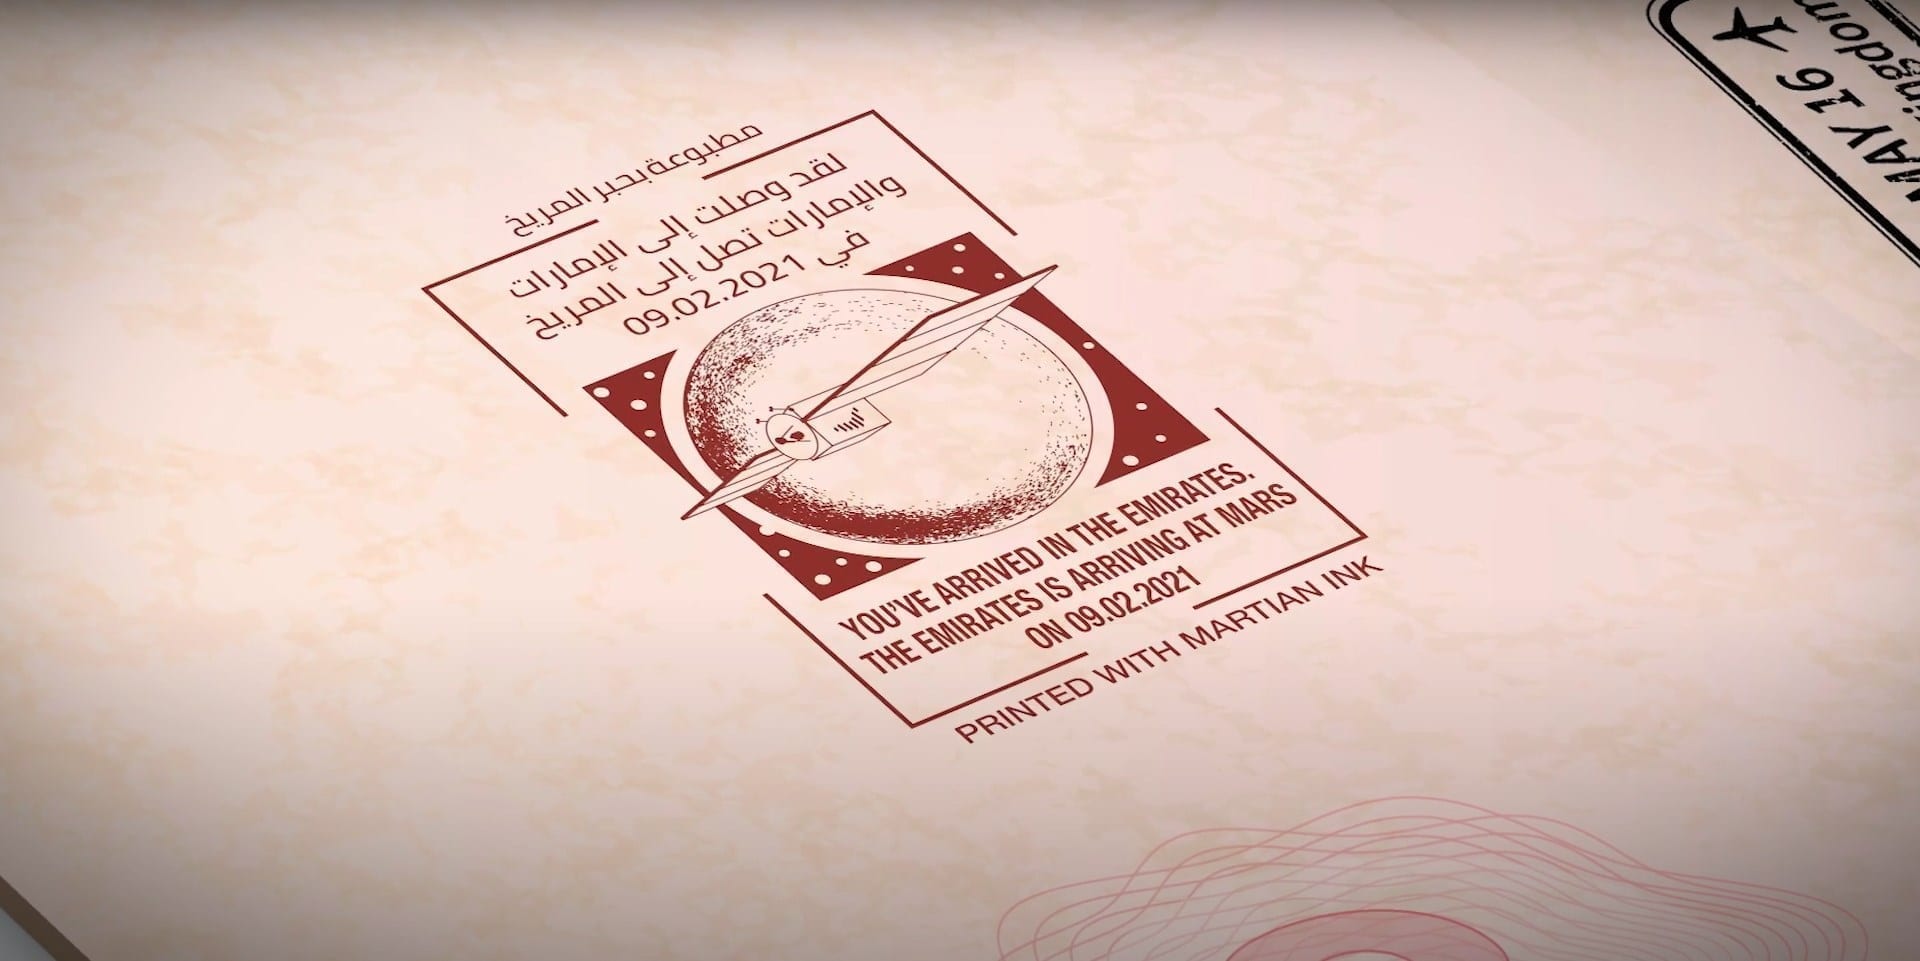 UAE special passport stamp marks